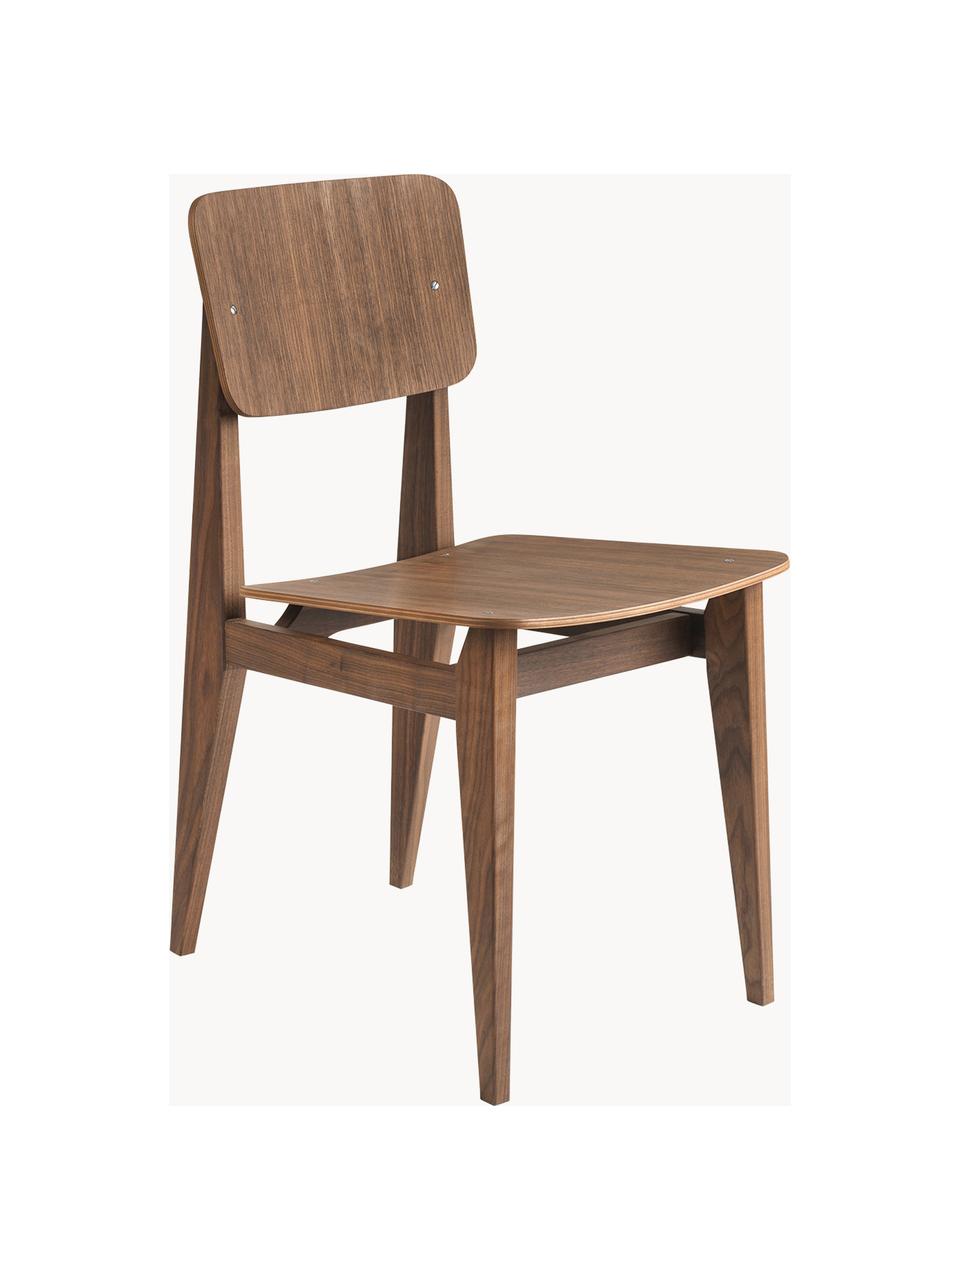 Holzstuhl C-Chair aus Walnussholz, Amerikanisches Walnussholz, geölt, Amerikanisches Walnussholz, B 41 x T 53 cm